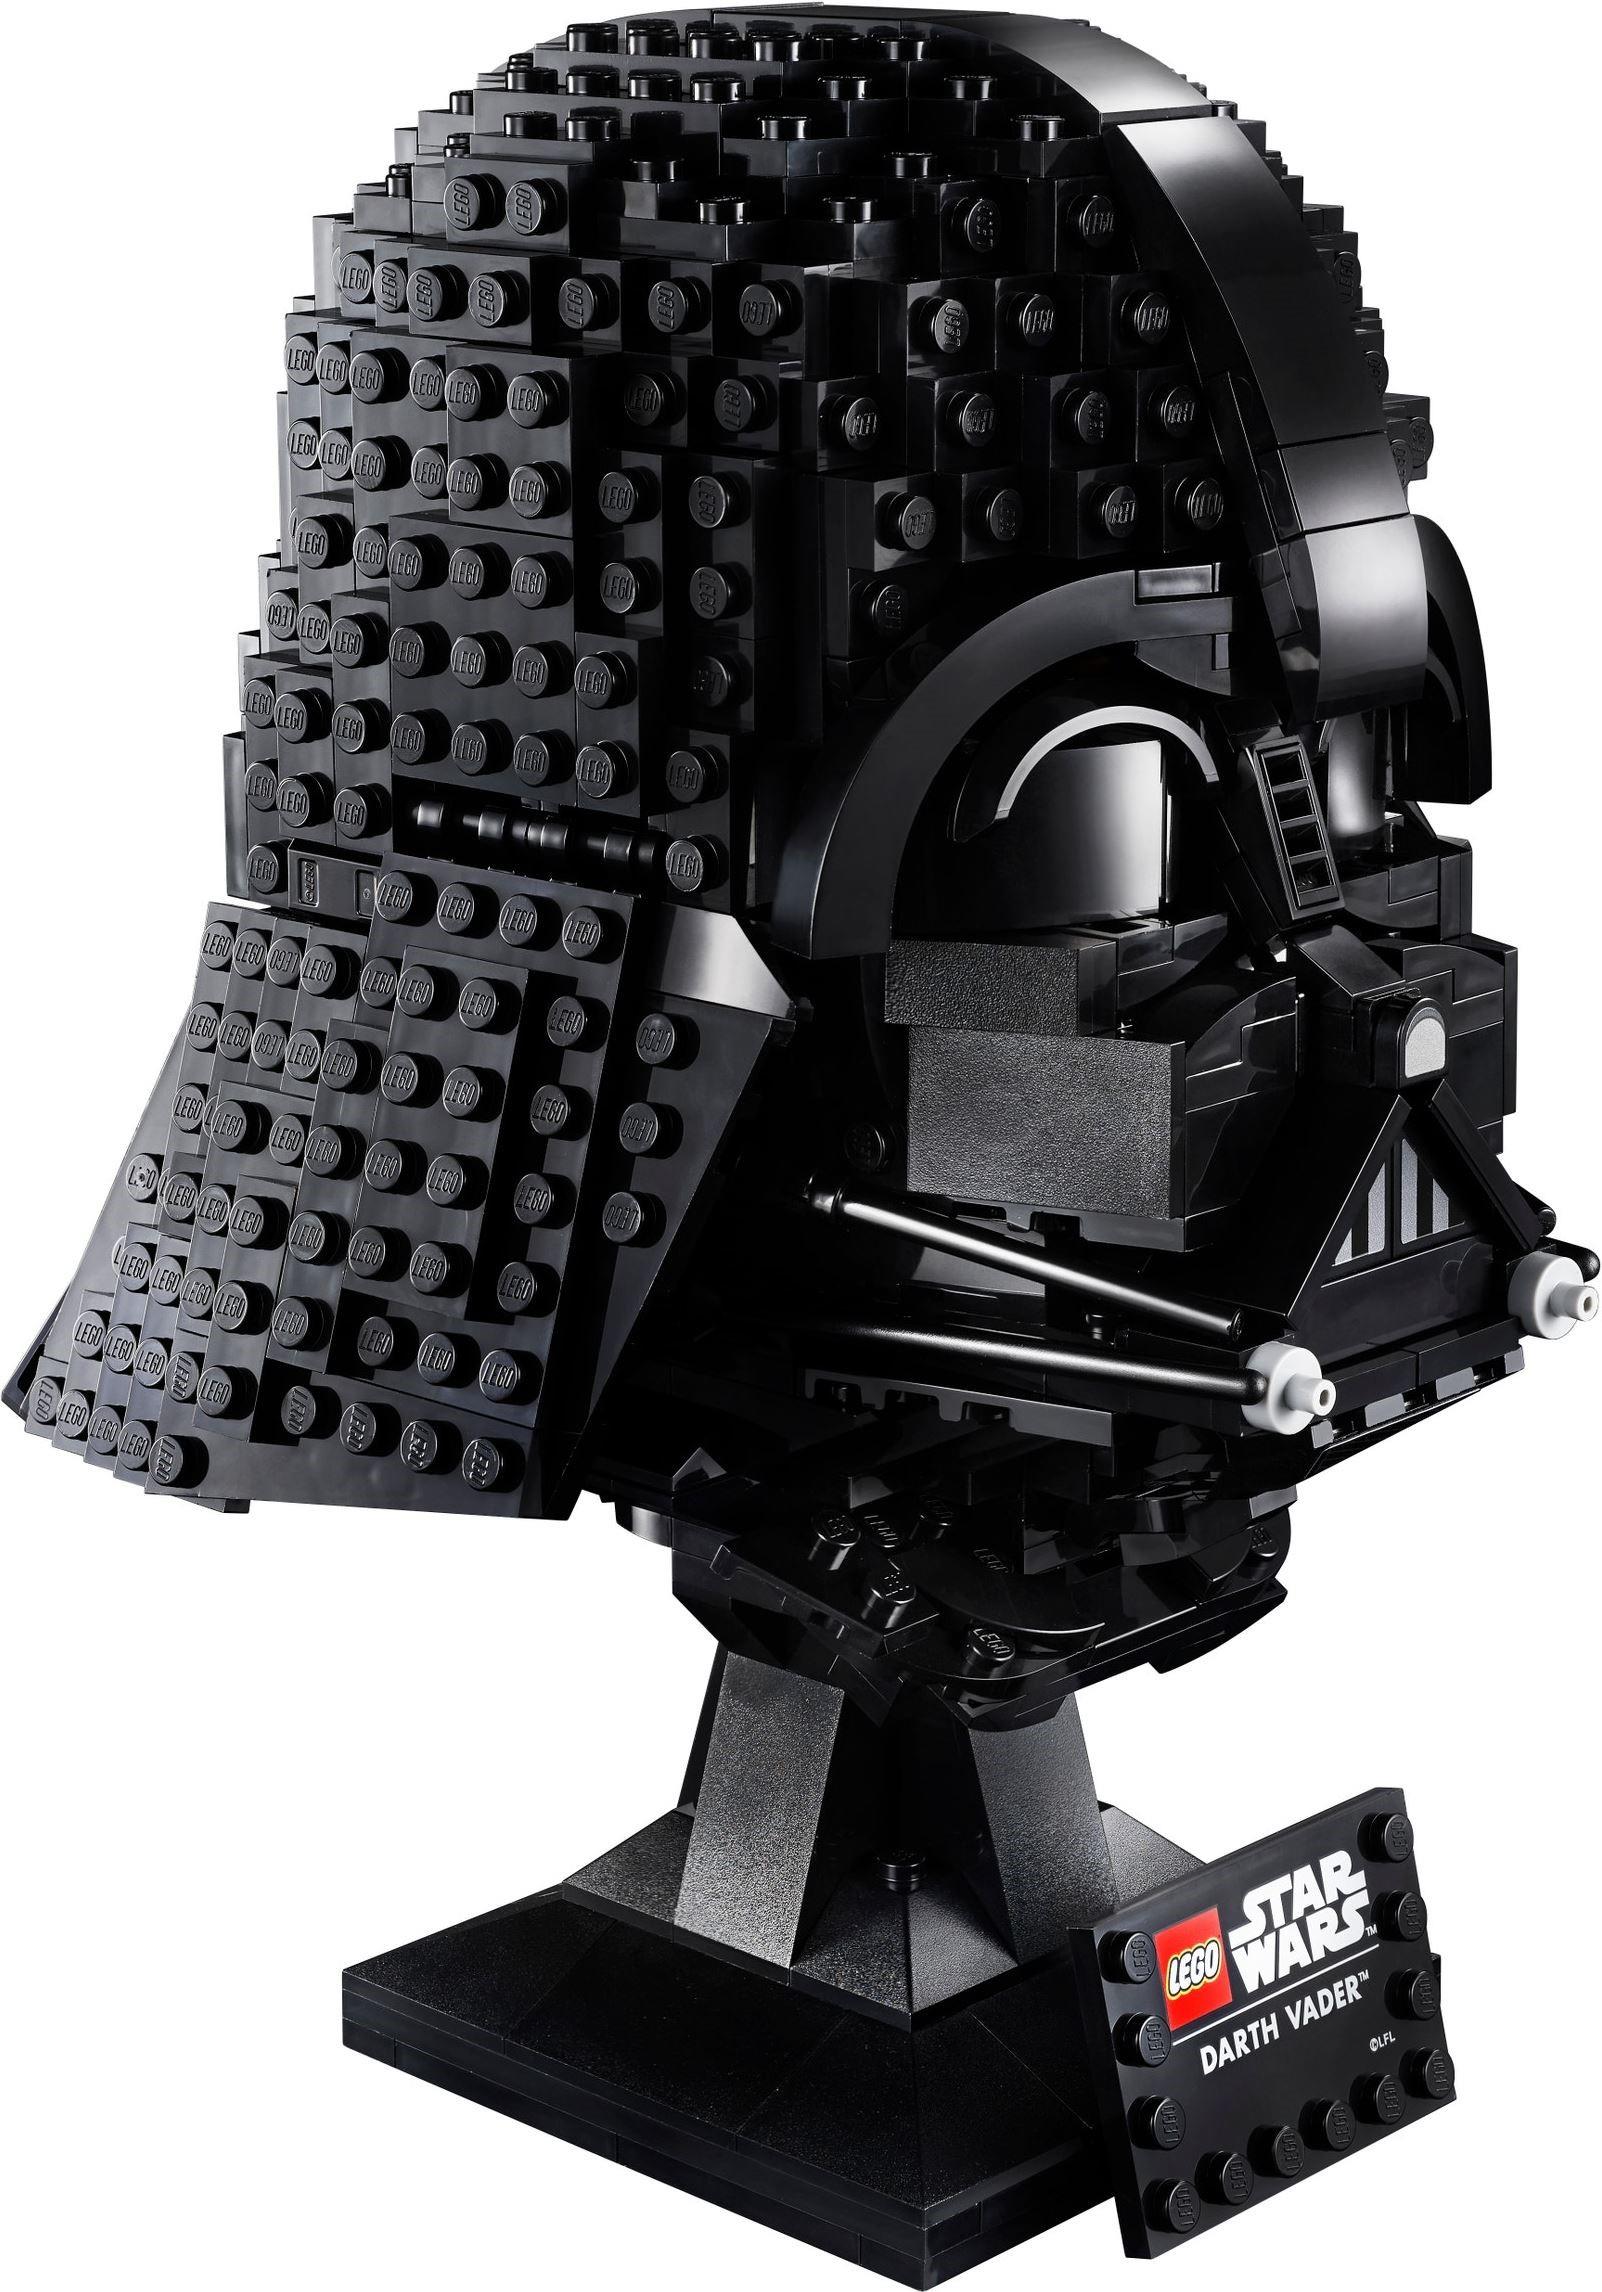 LEGO Star Wars Skywalker Saga Pre-order Guide - BricksFanz